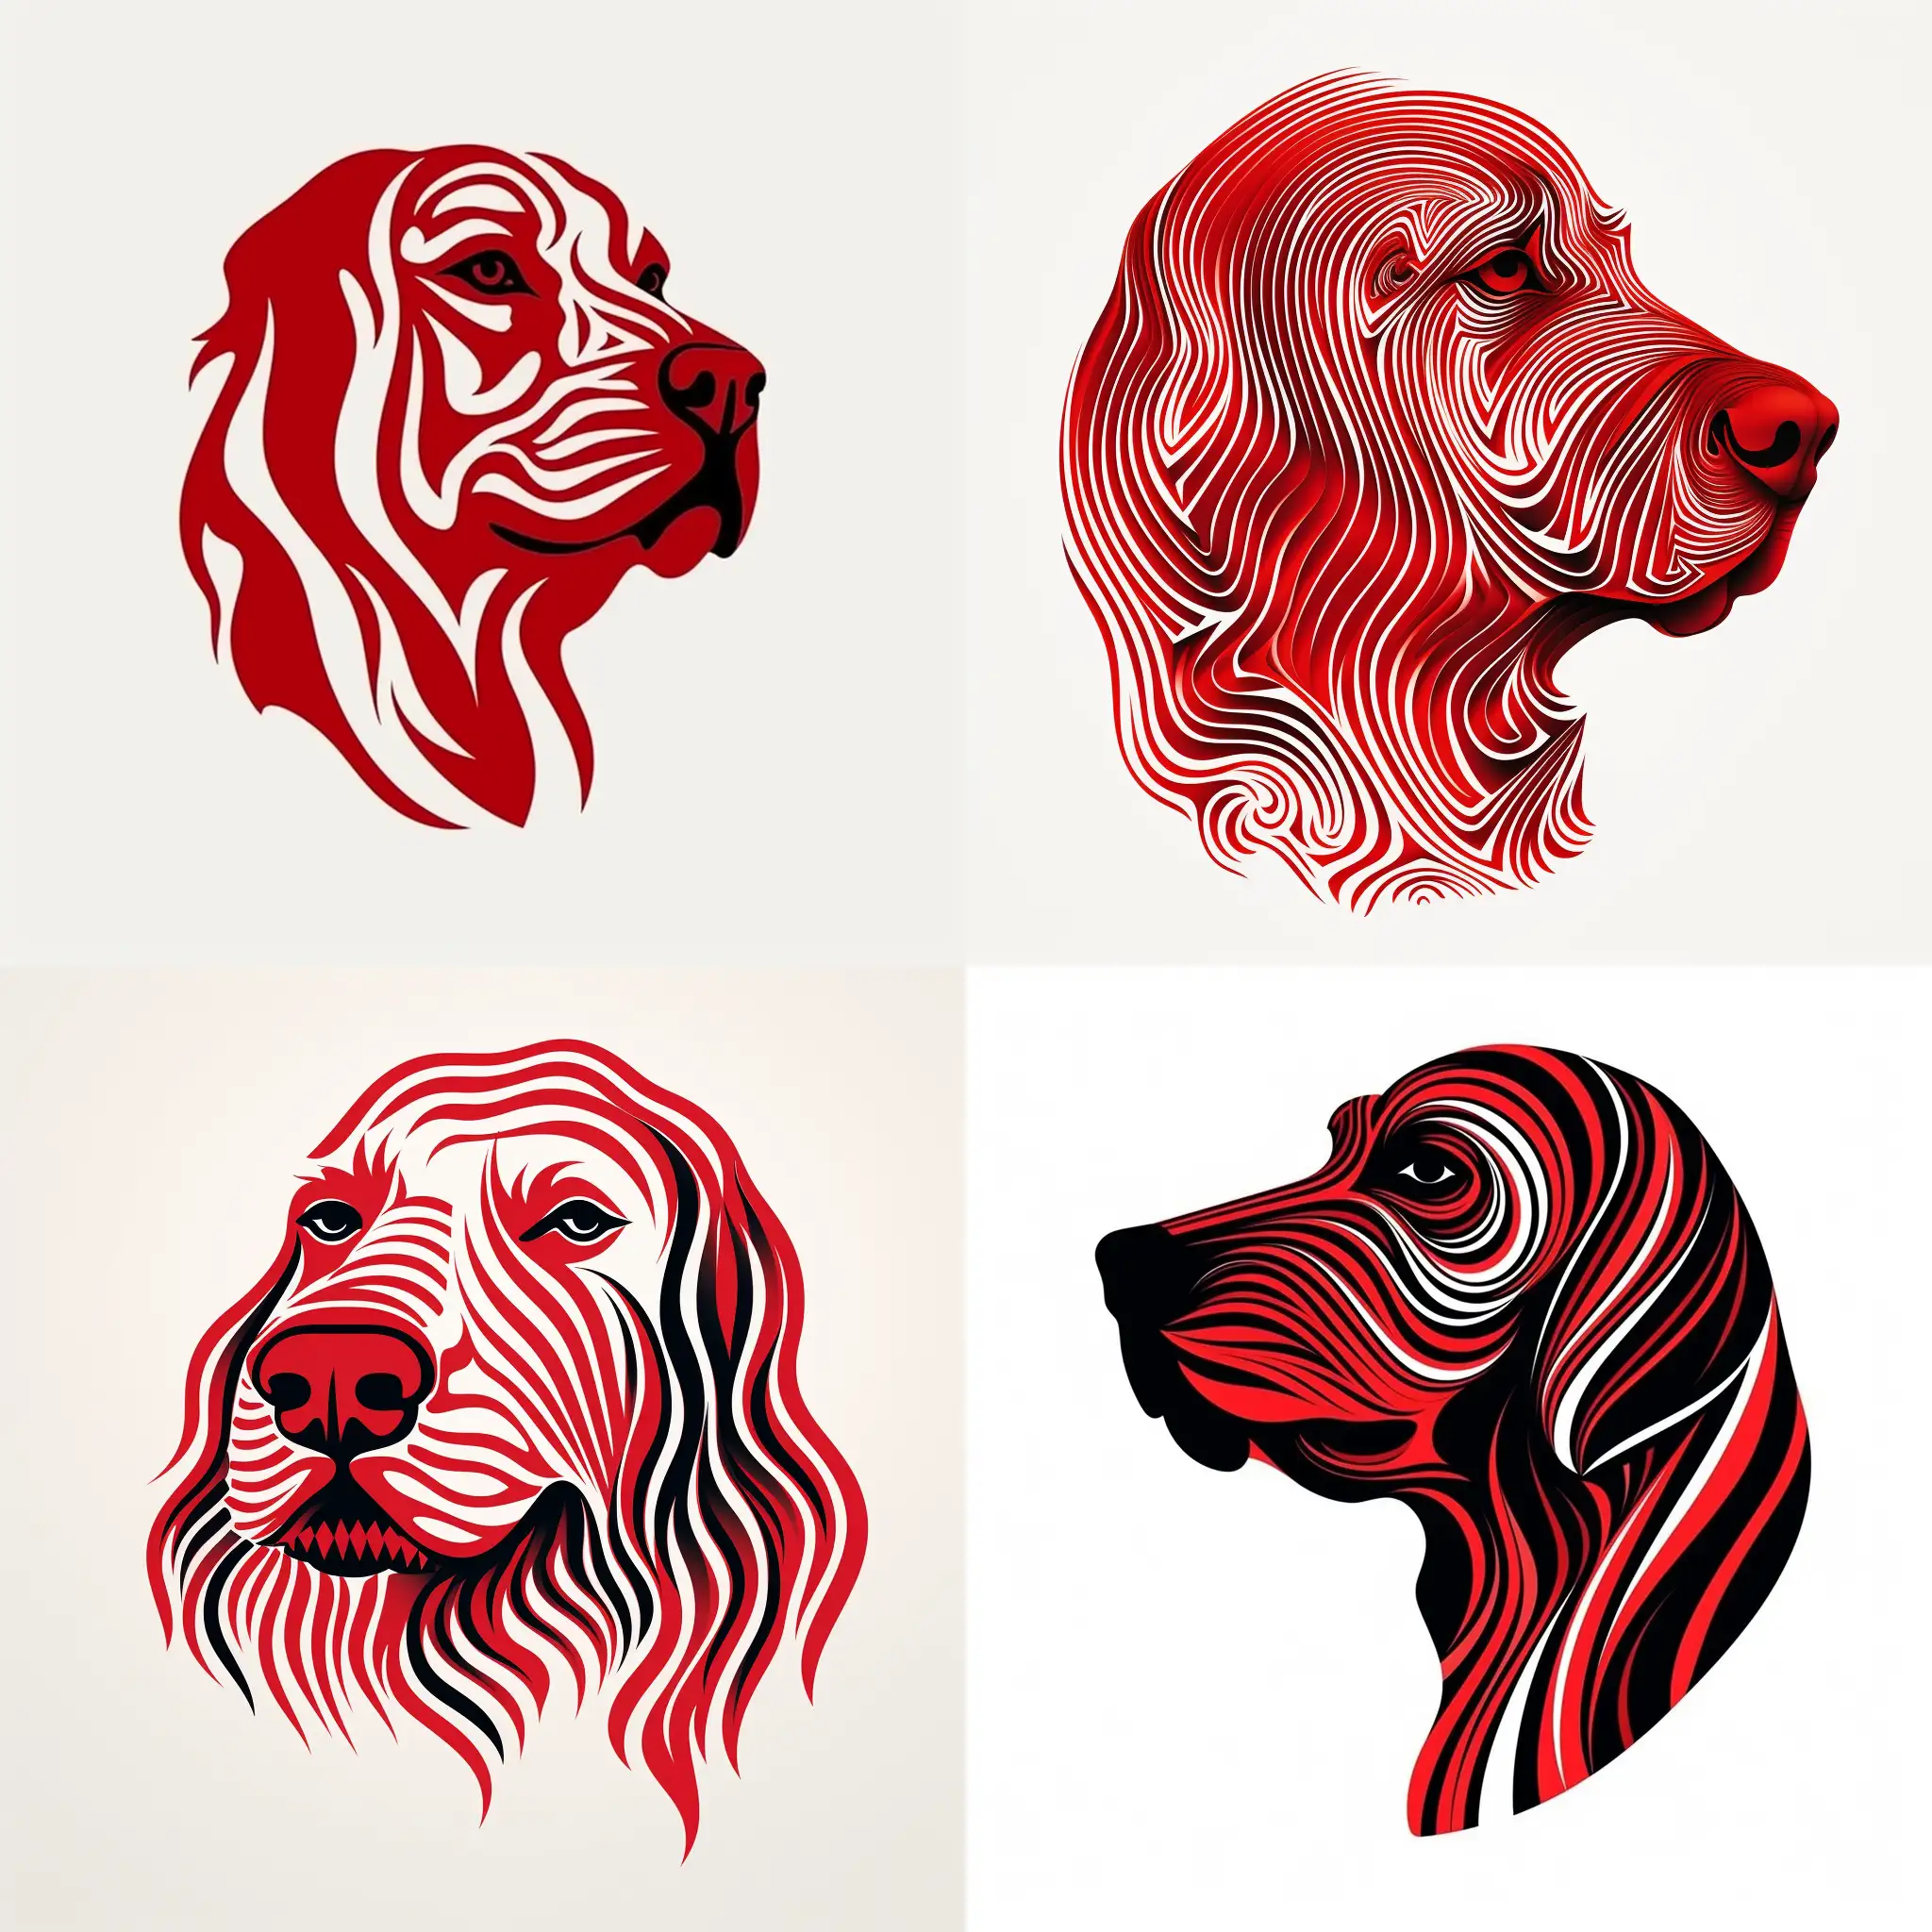 Minimalistic-Monochrome-Engraving-of-a-Red-Dog-Head-Logo